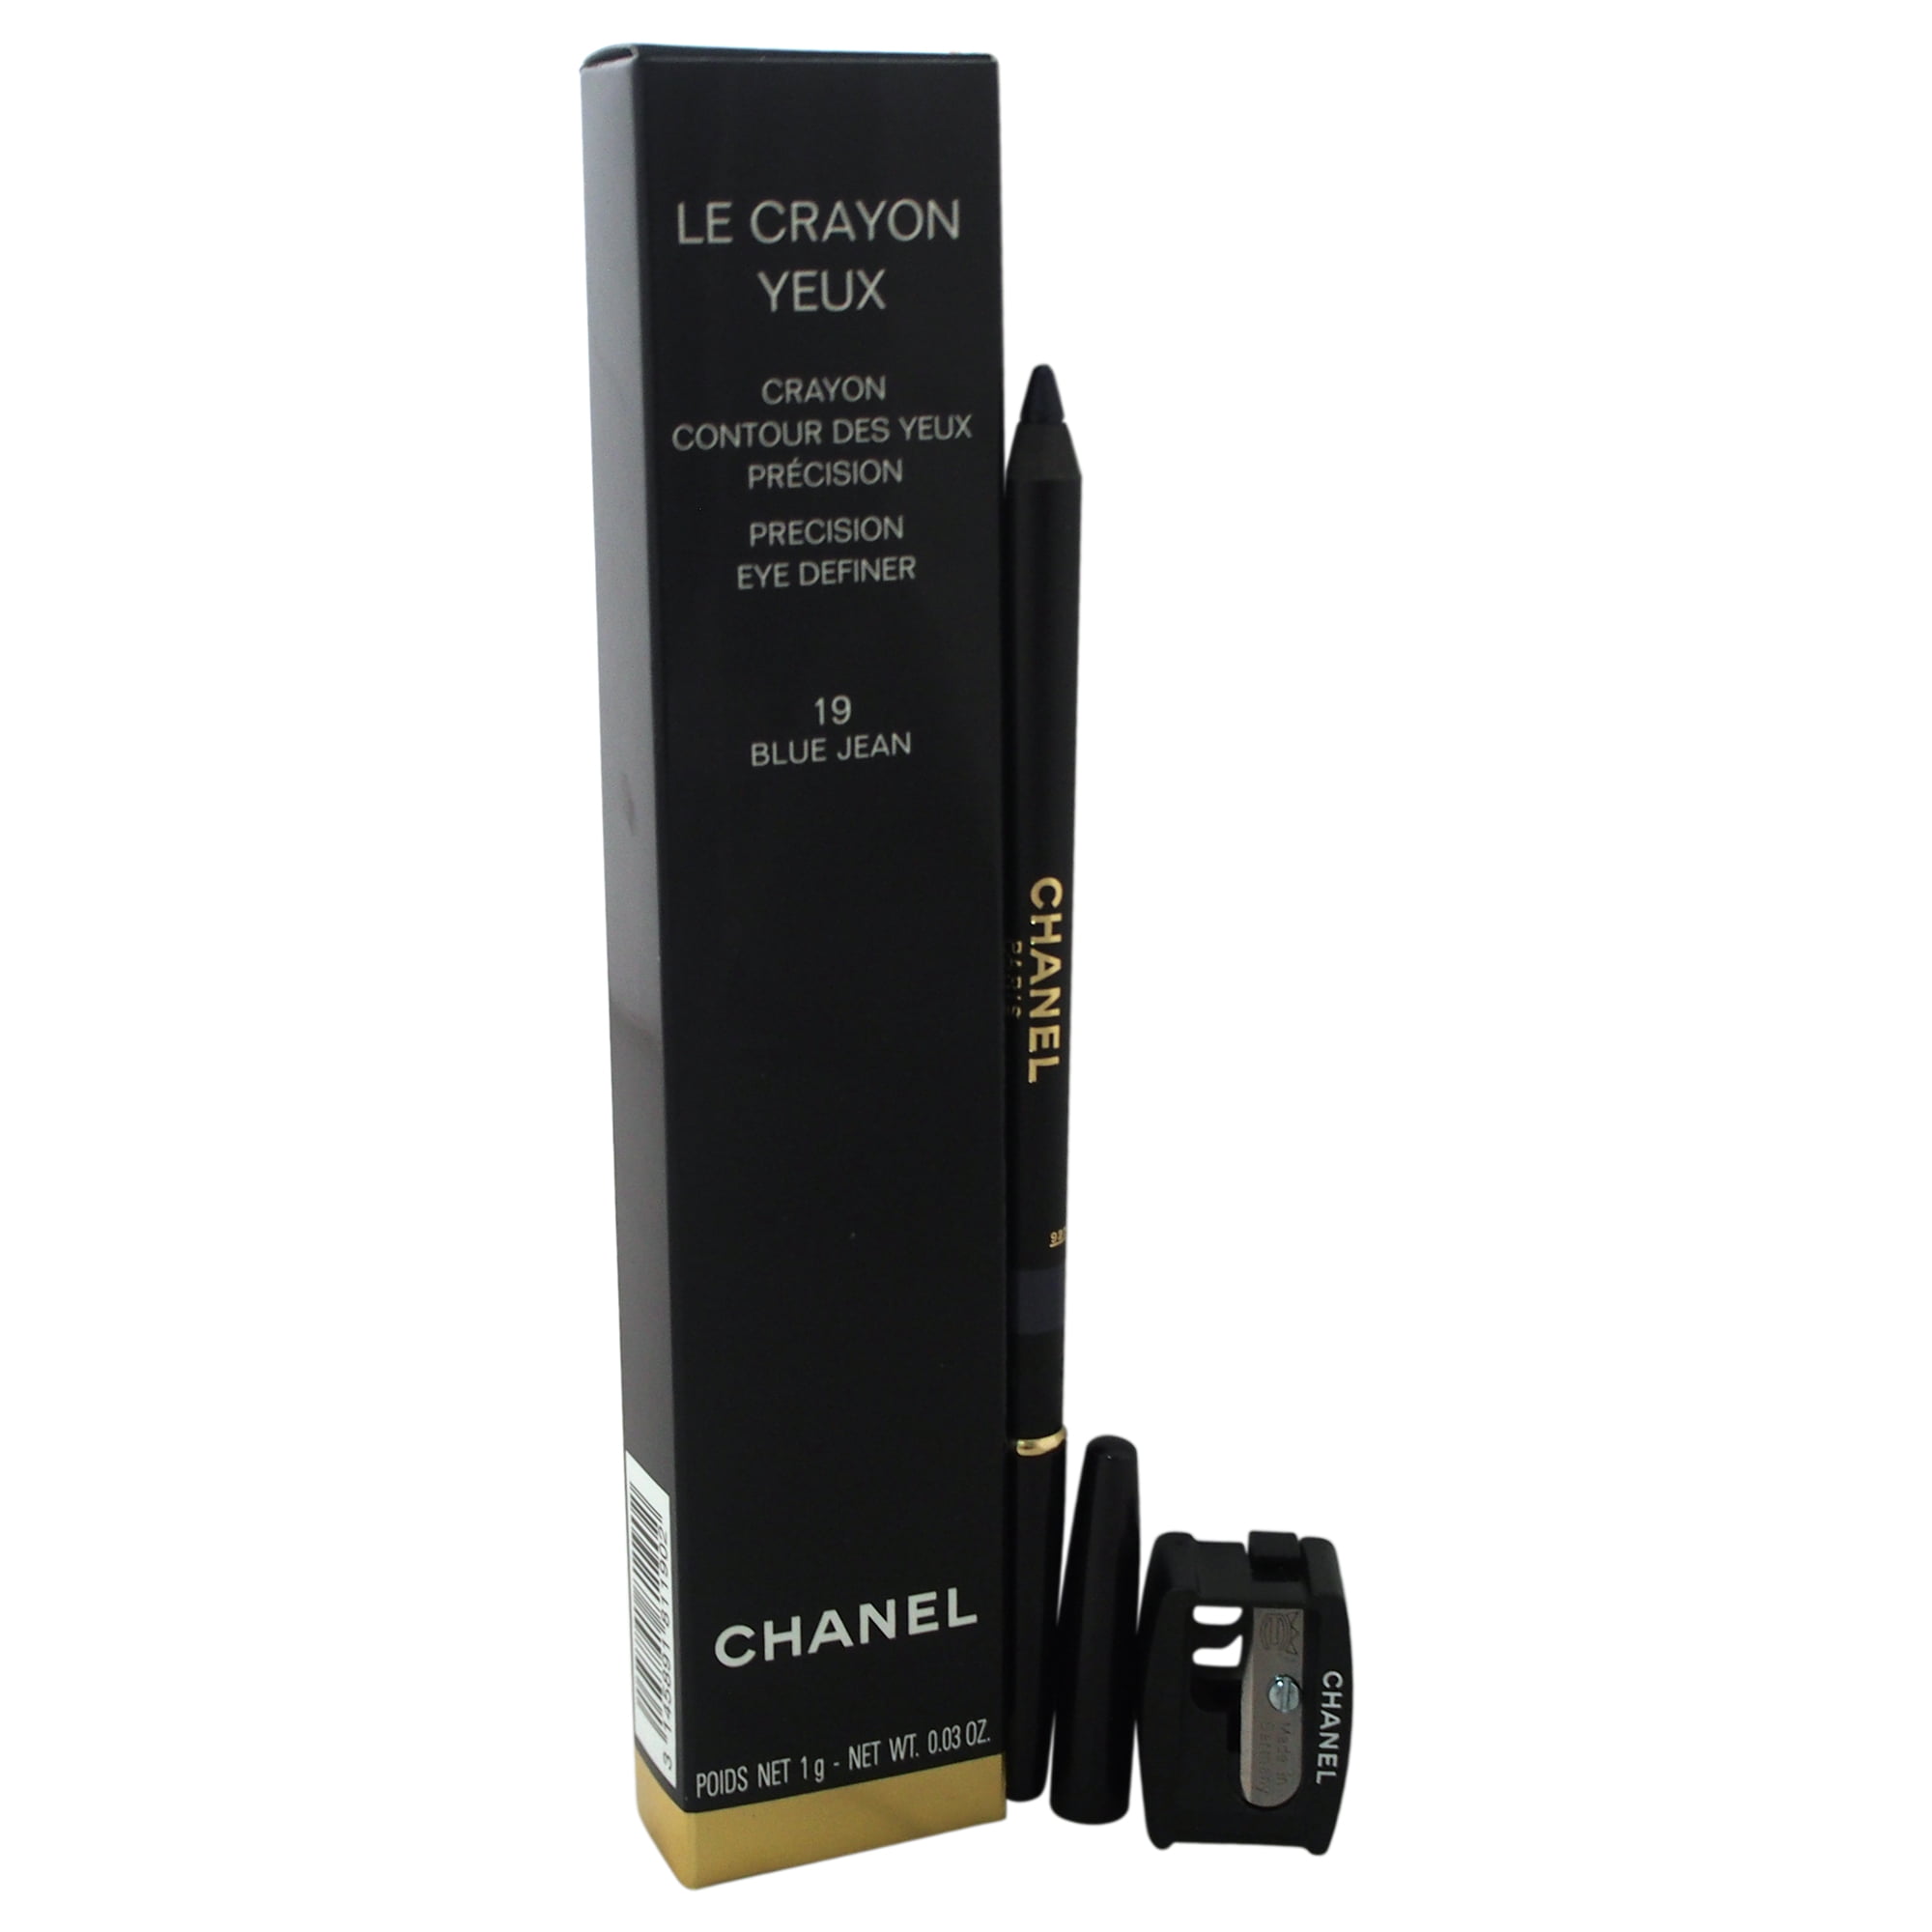 Chanel Le Crayon Yeux Precision Eye Definer 66 Brun-Cuivre